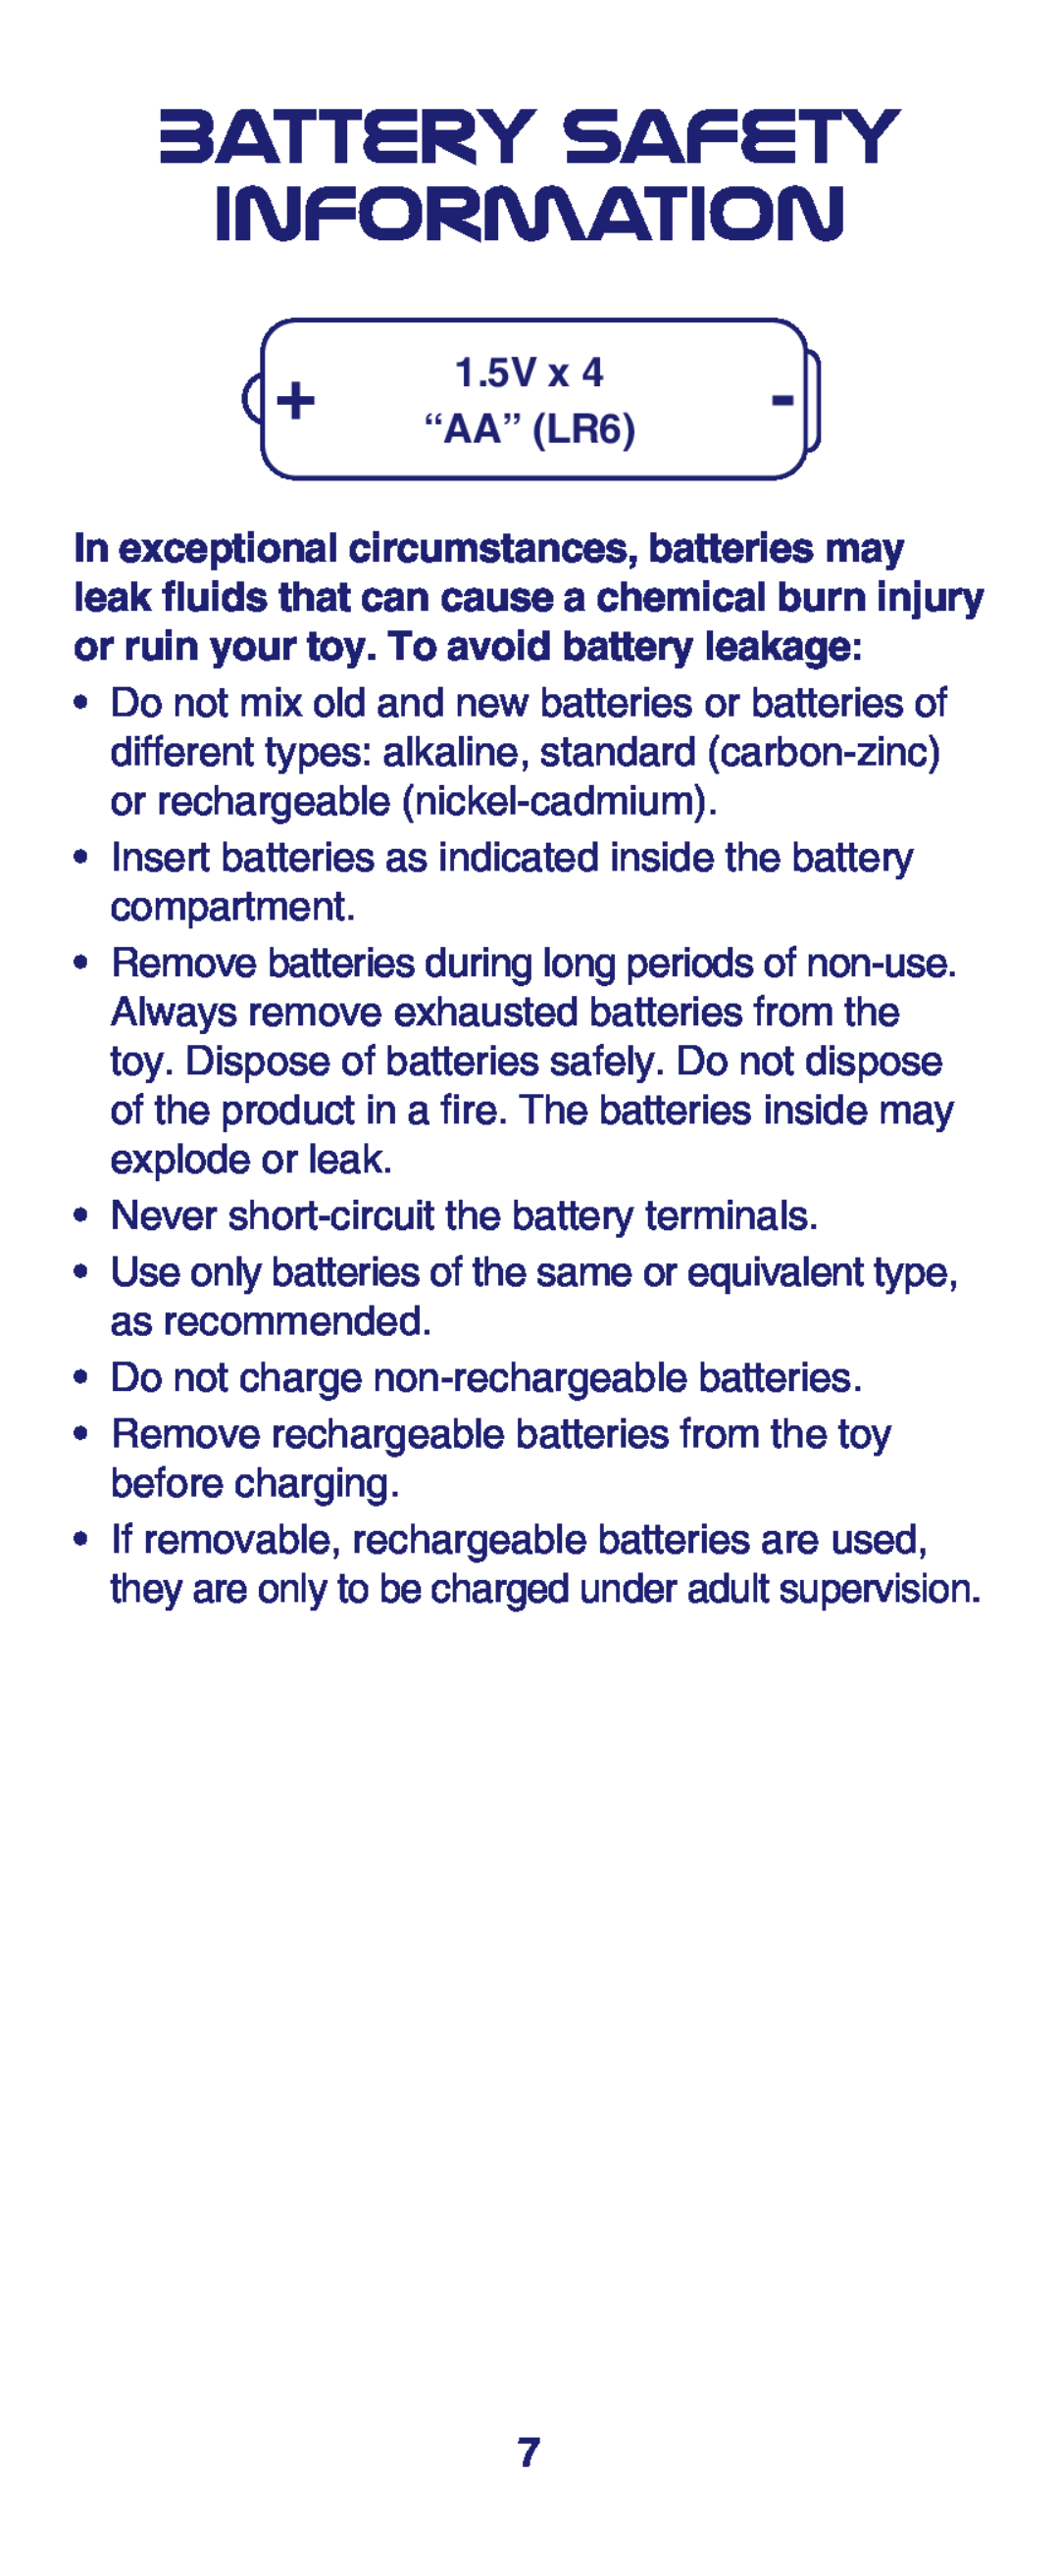 Fisher-Price L4810, M2126 instruction sheet Battery Safety Information, 1.5V x “AA” LR6 